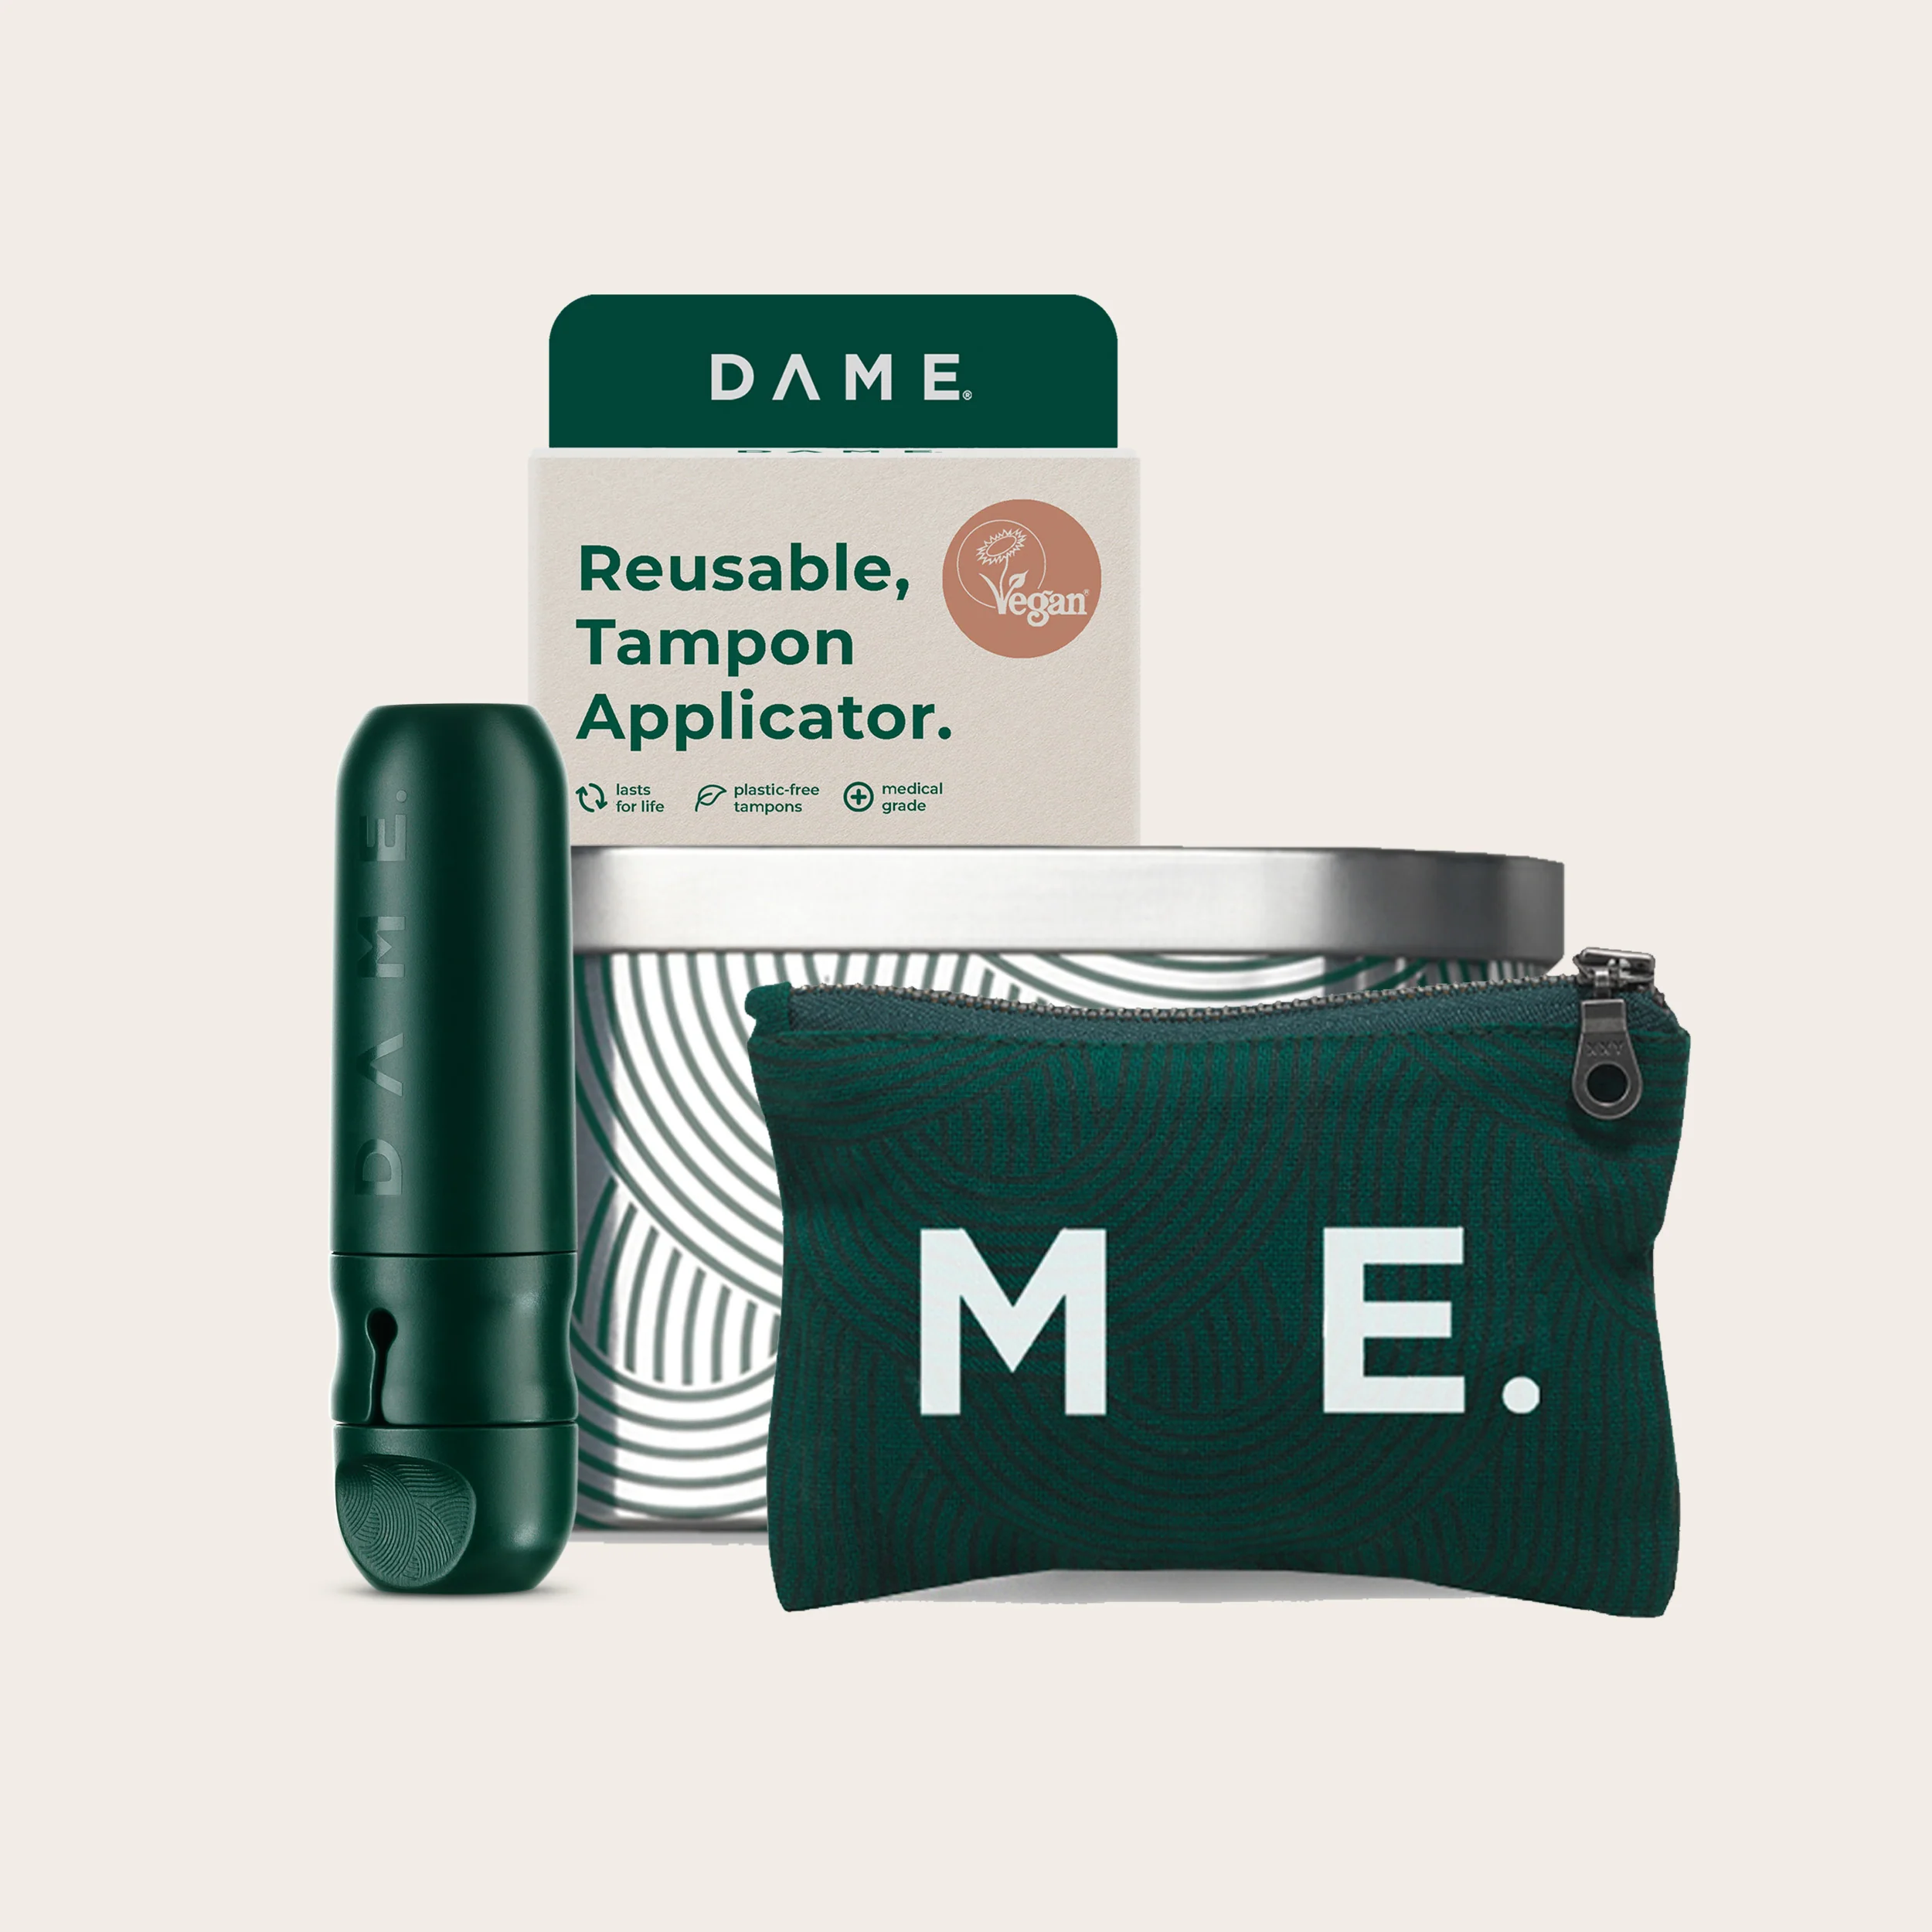 DAME reusable tampon applicator set